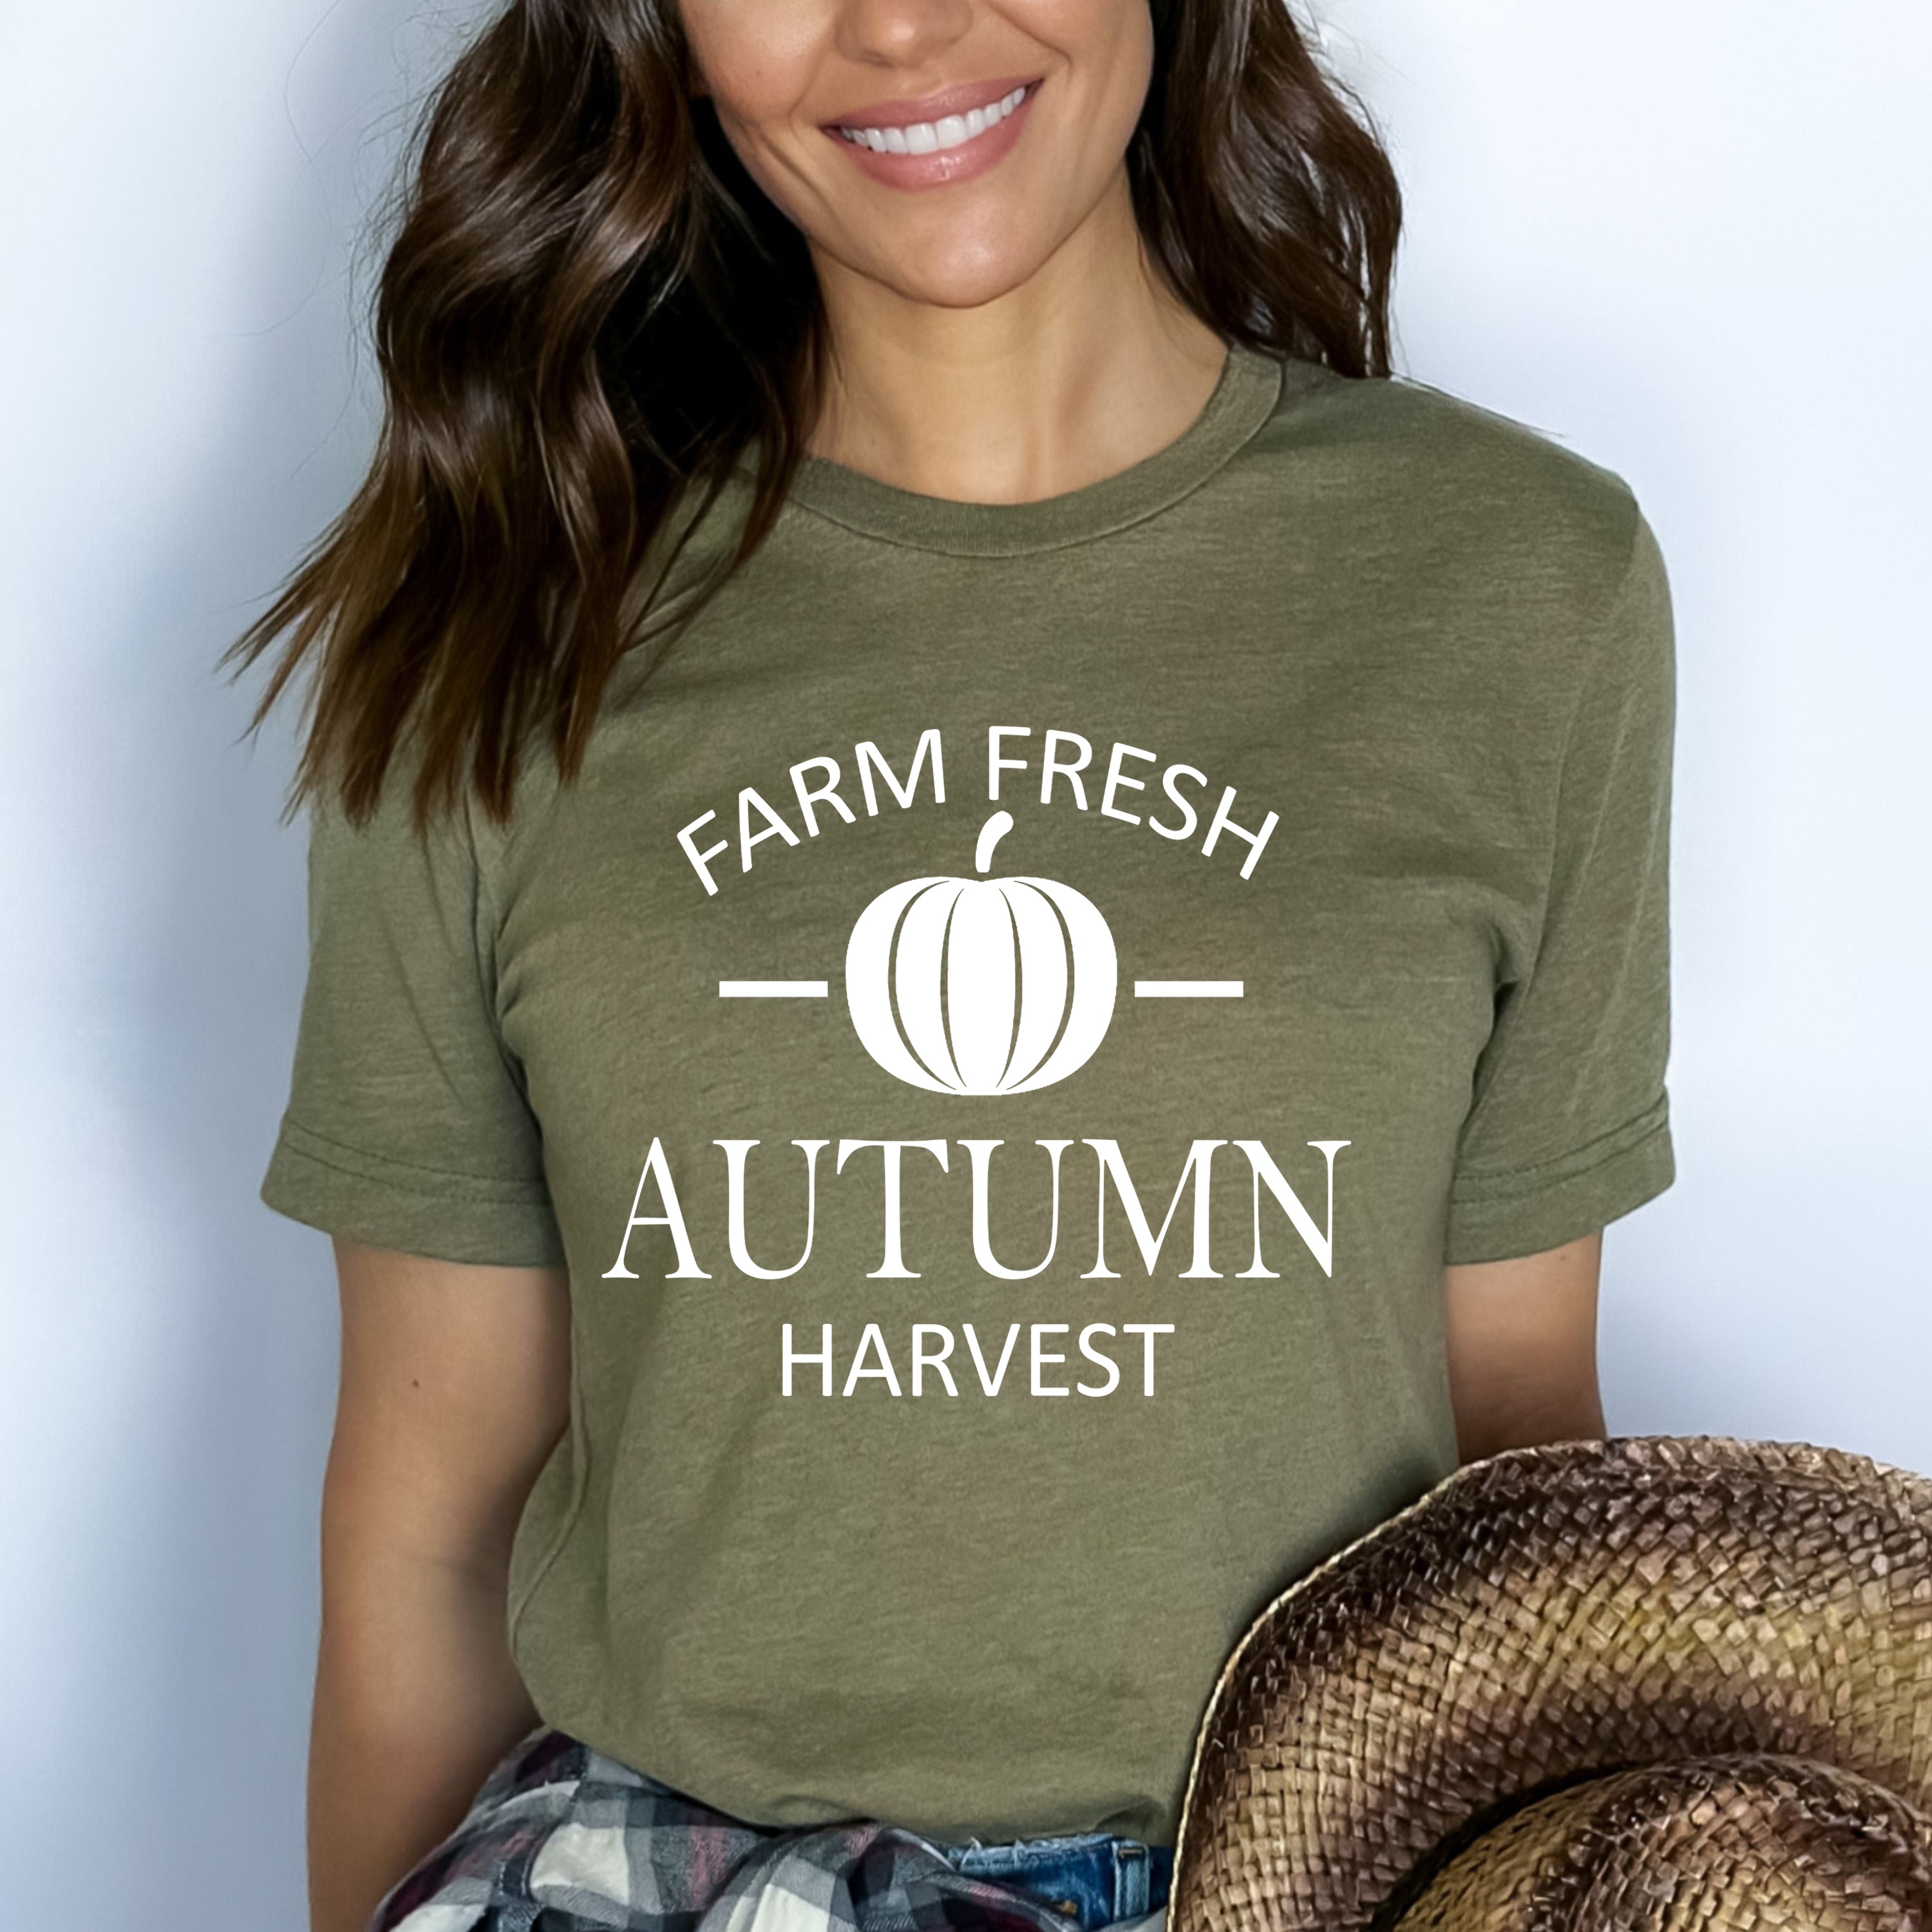 Farm Fresh Autumn Harvest - Bella Canvas